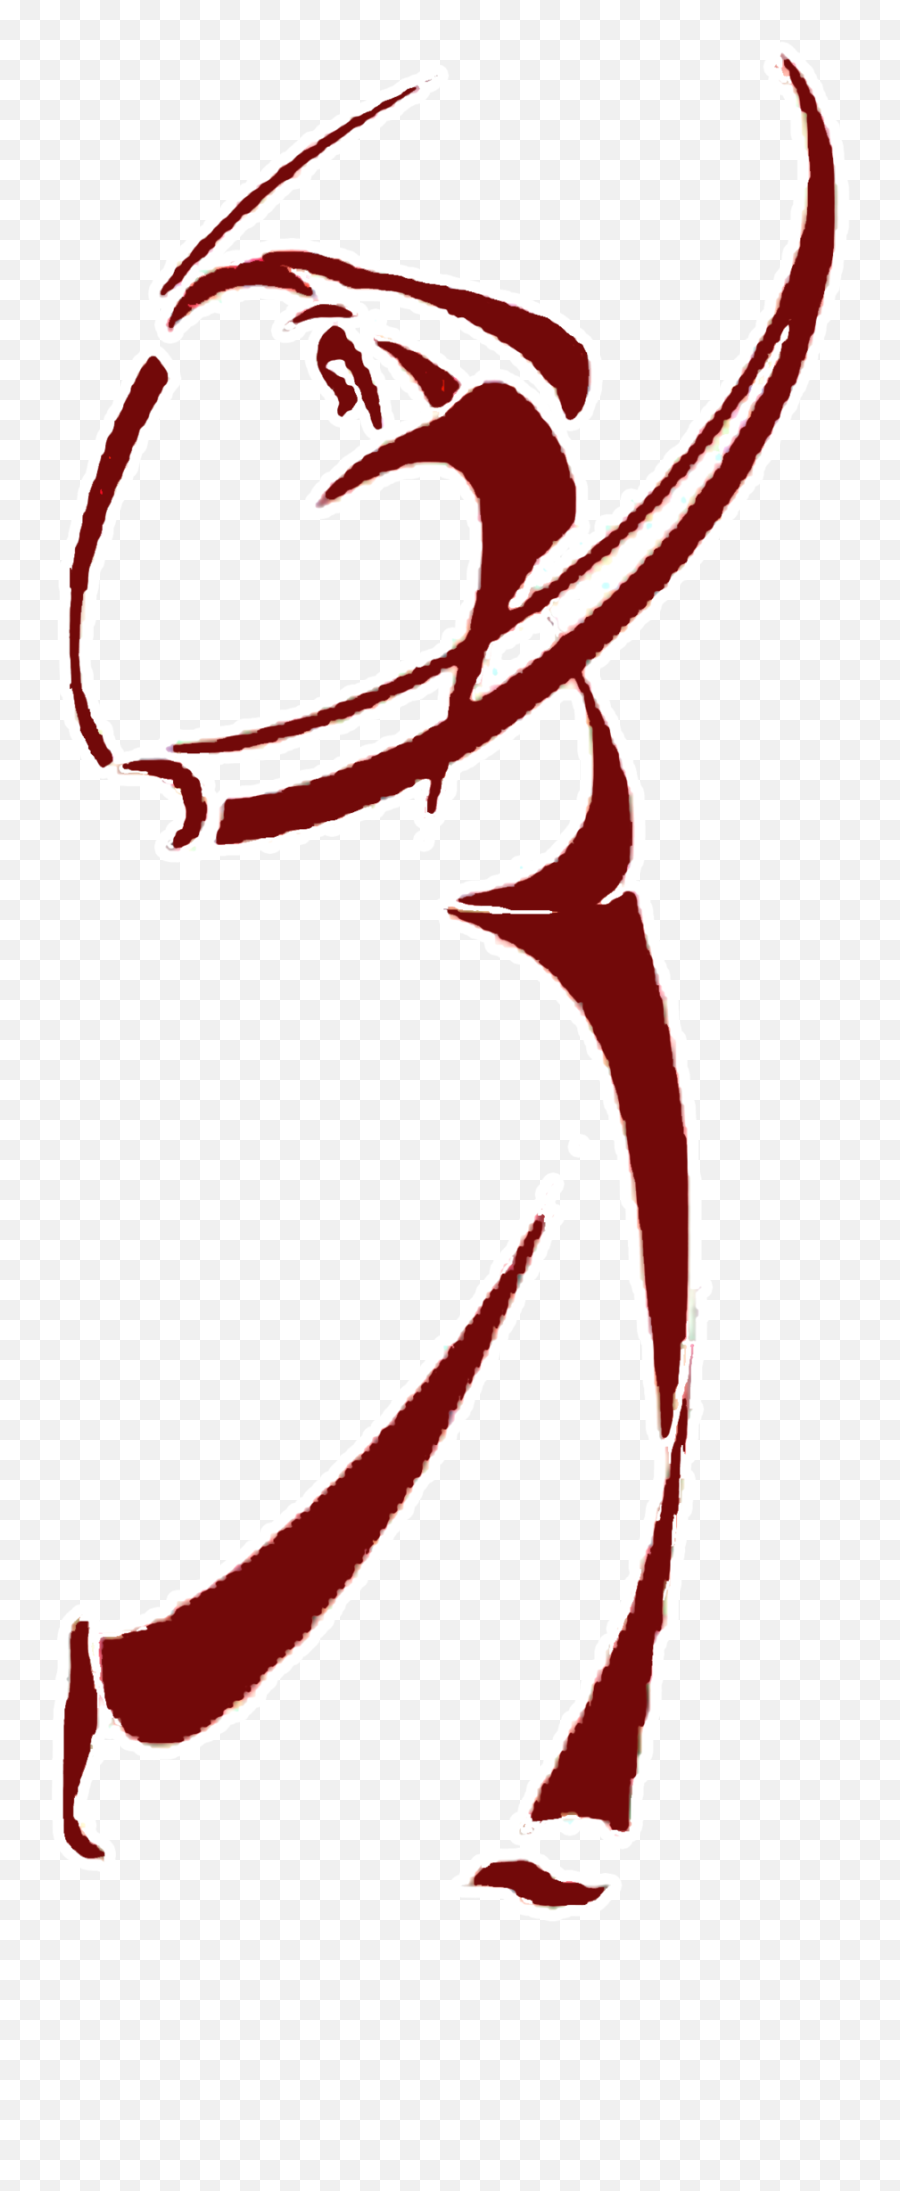 Golf Icon Png Transparent Image - Golfer Swinging,Golf Icon